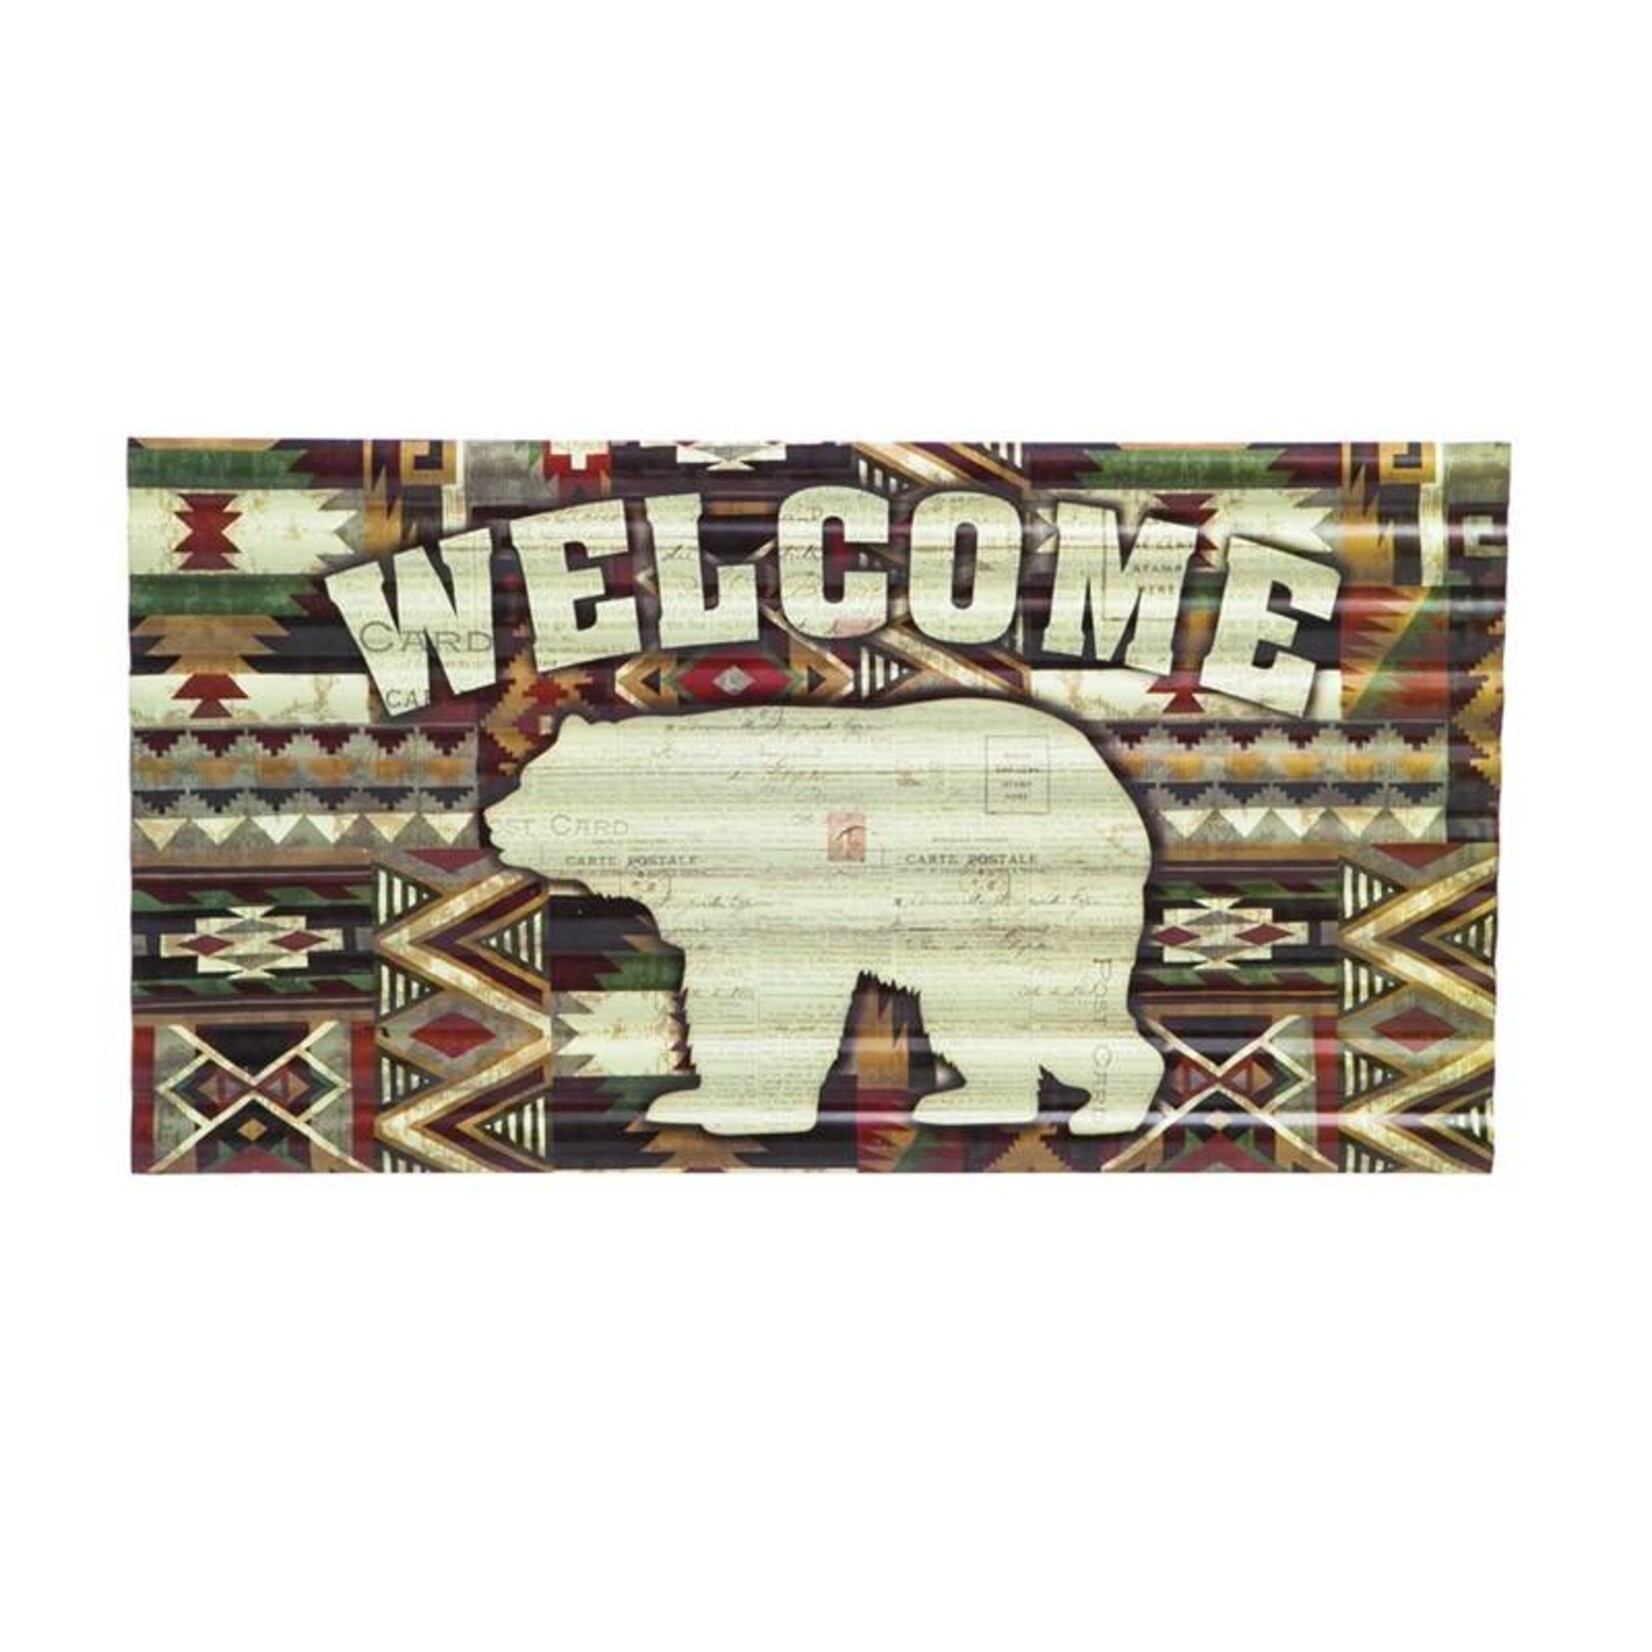 Welcome Bear - Metal Corrugate